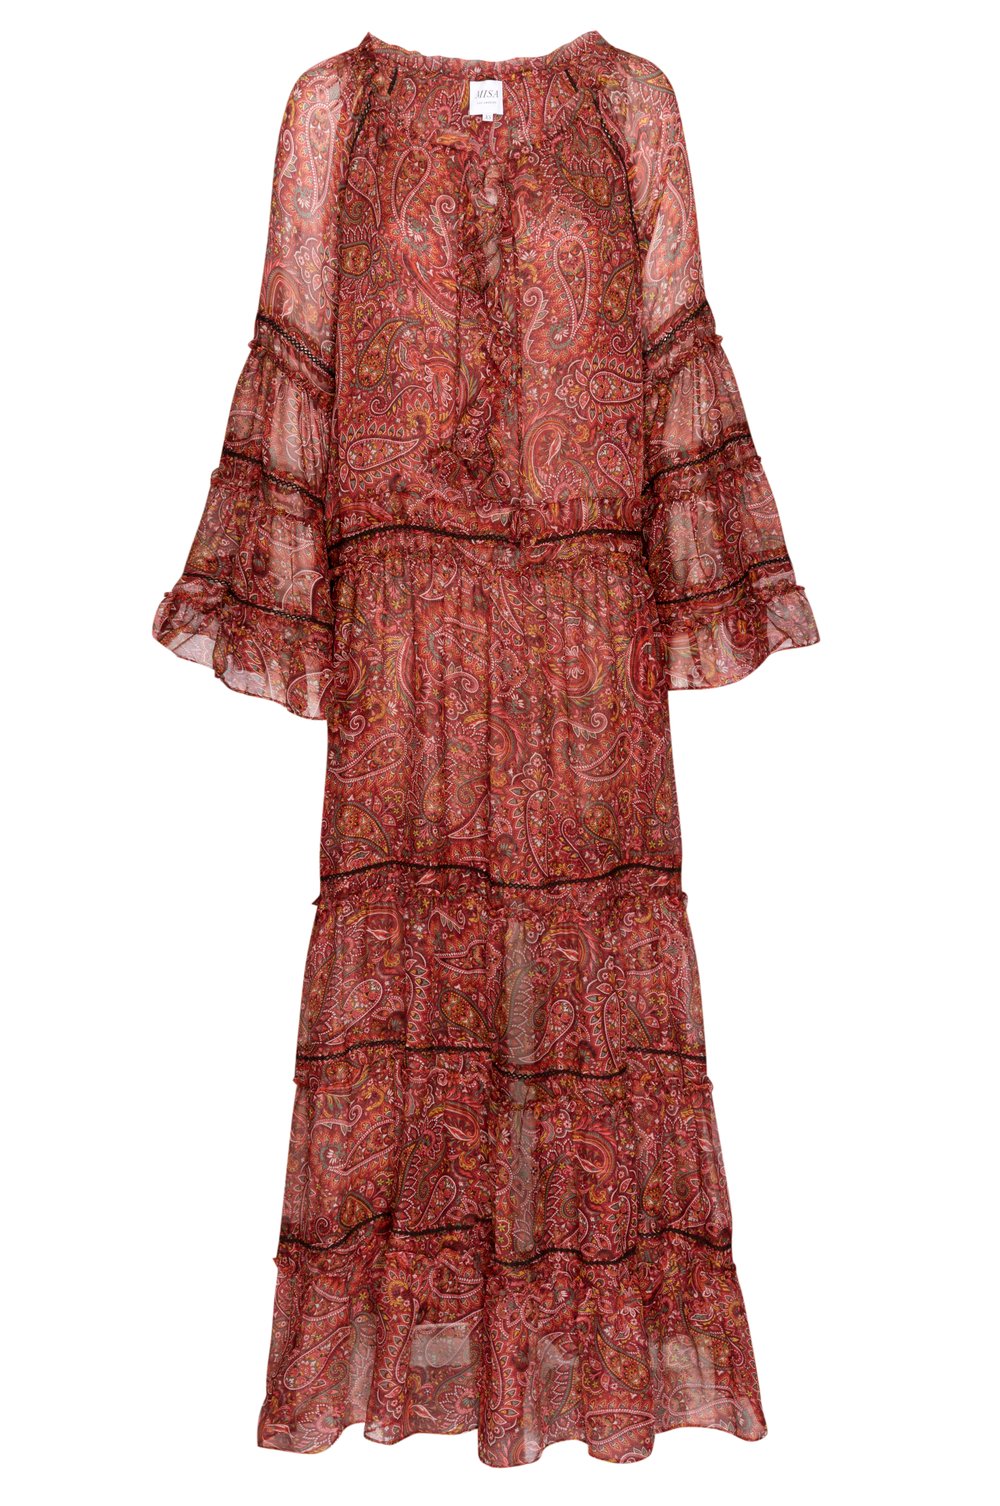 Misa - Genevieve Dress in Bohemian Paisley